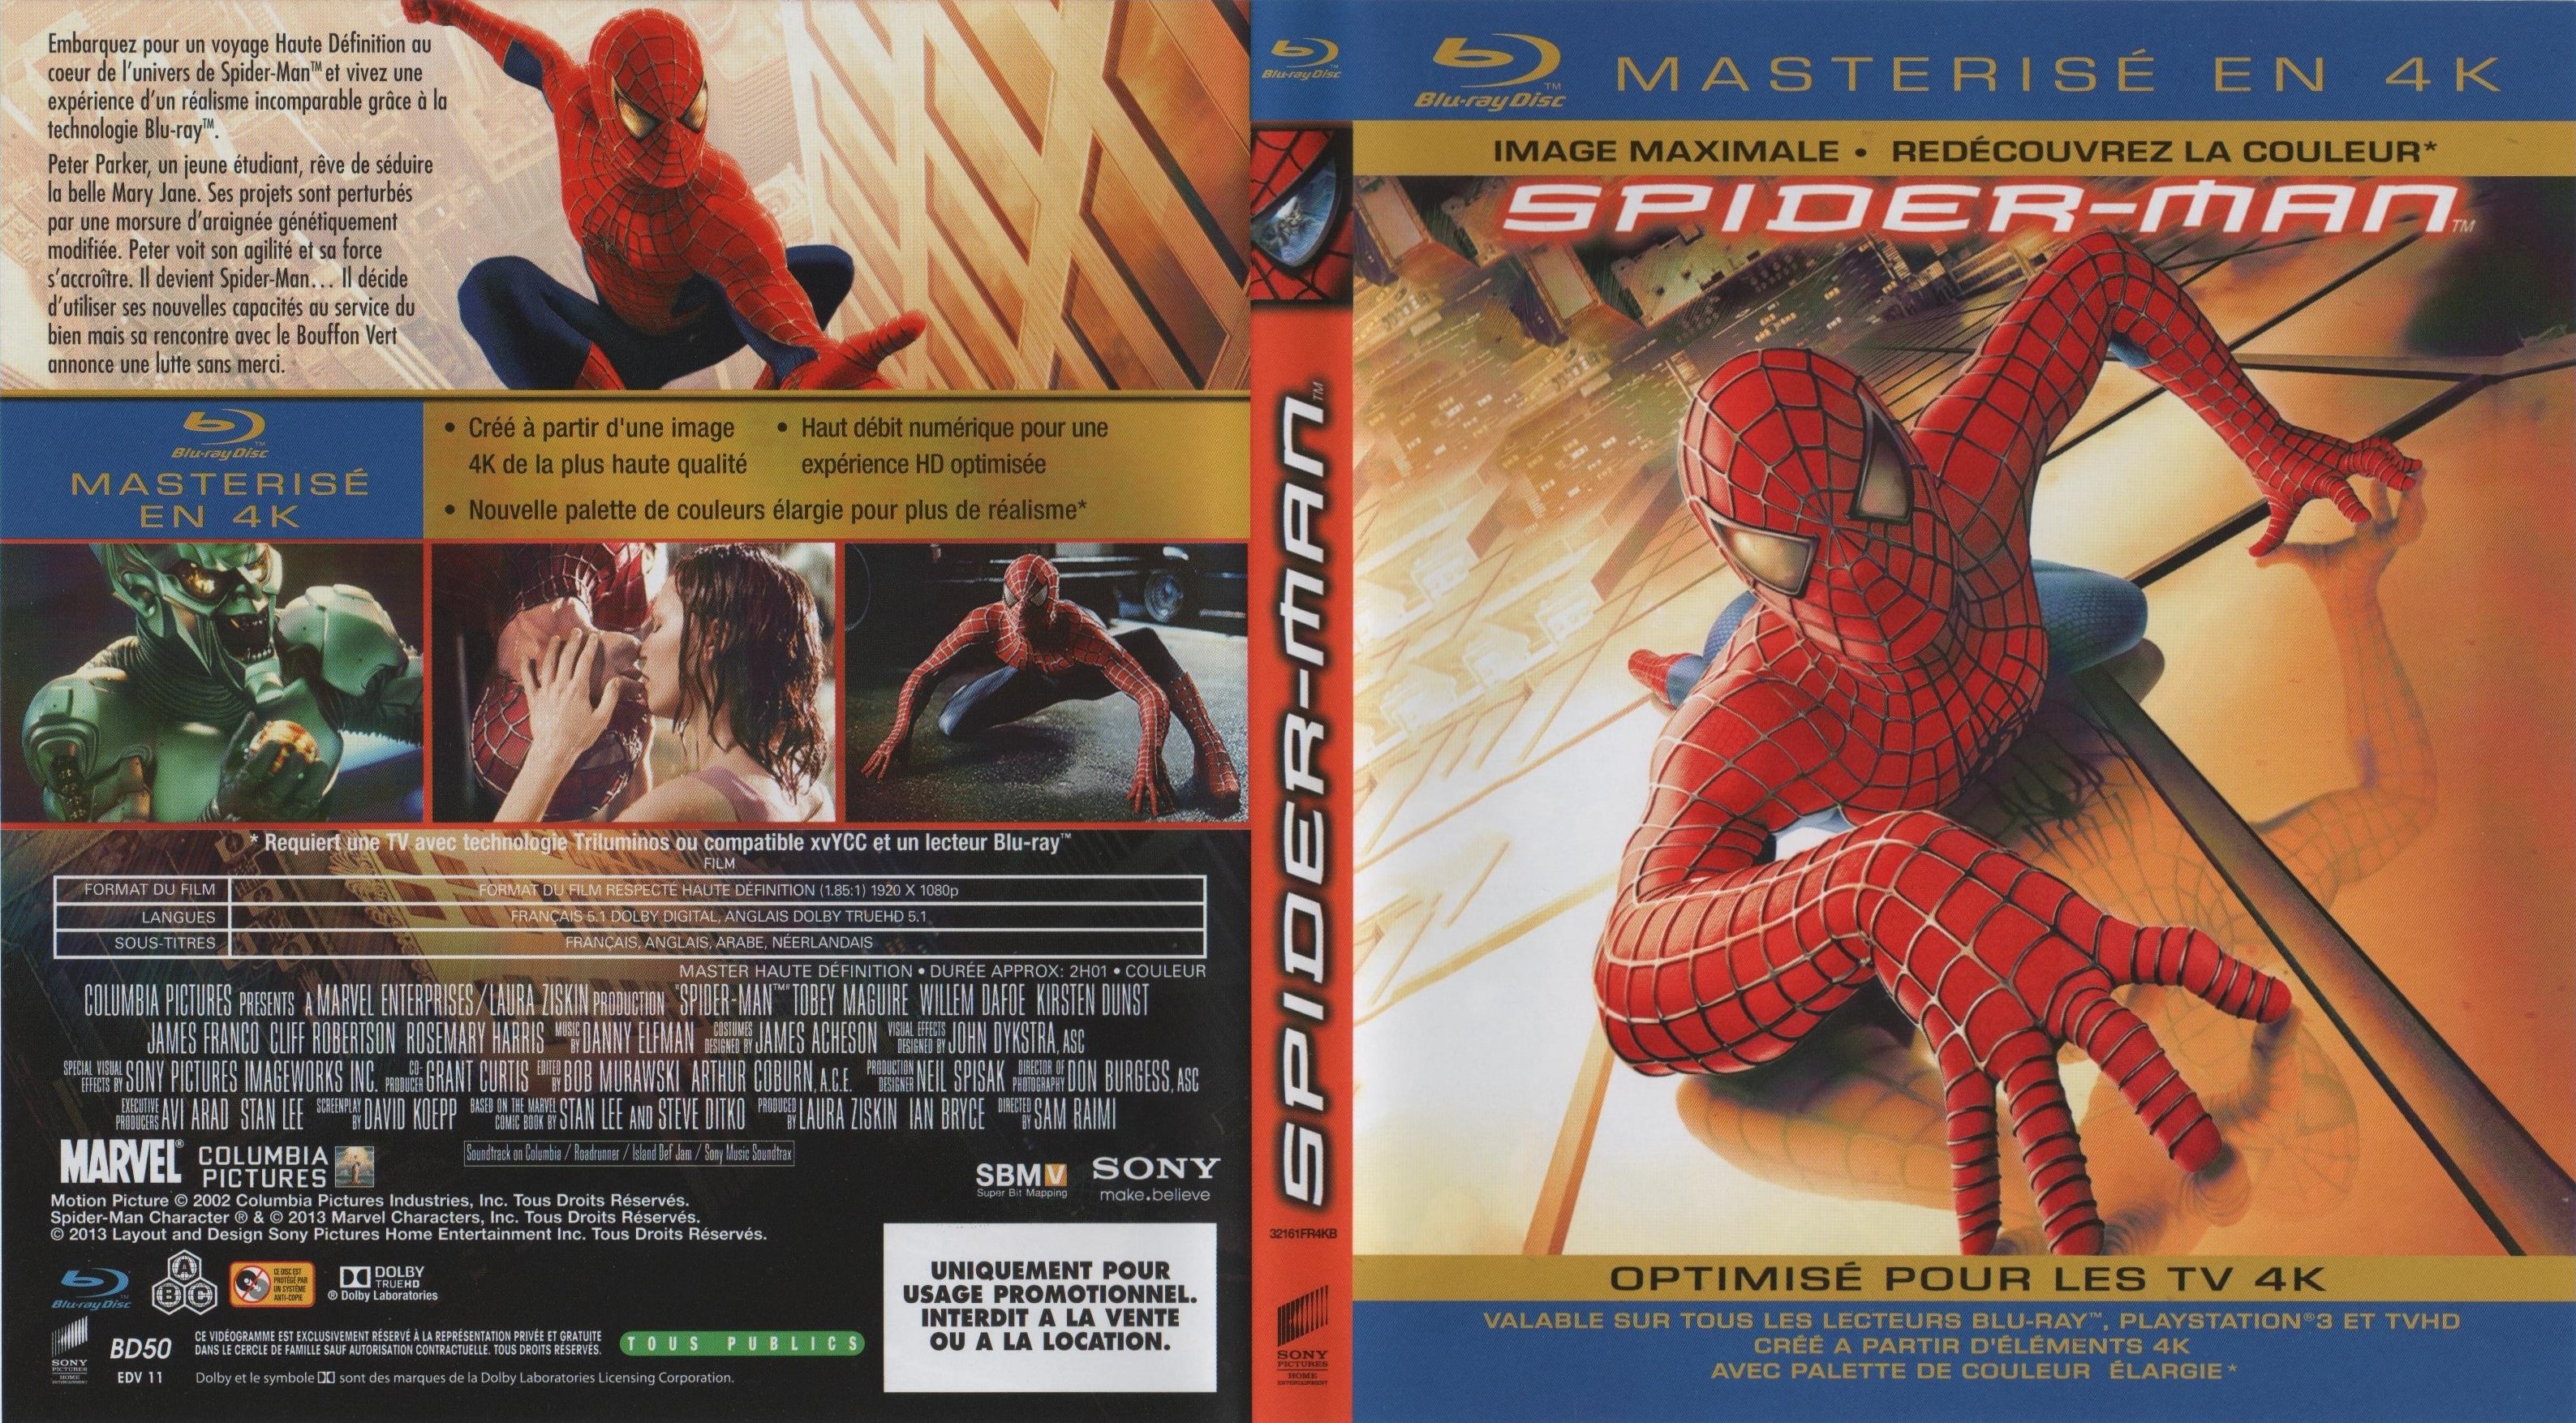 Jaquette DVD Spiderman (BLU-RAY) v2